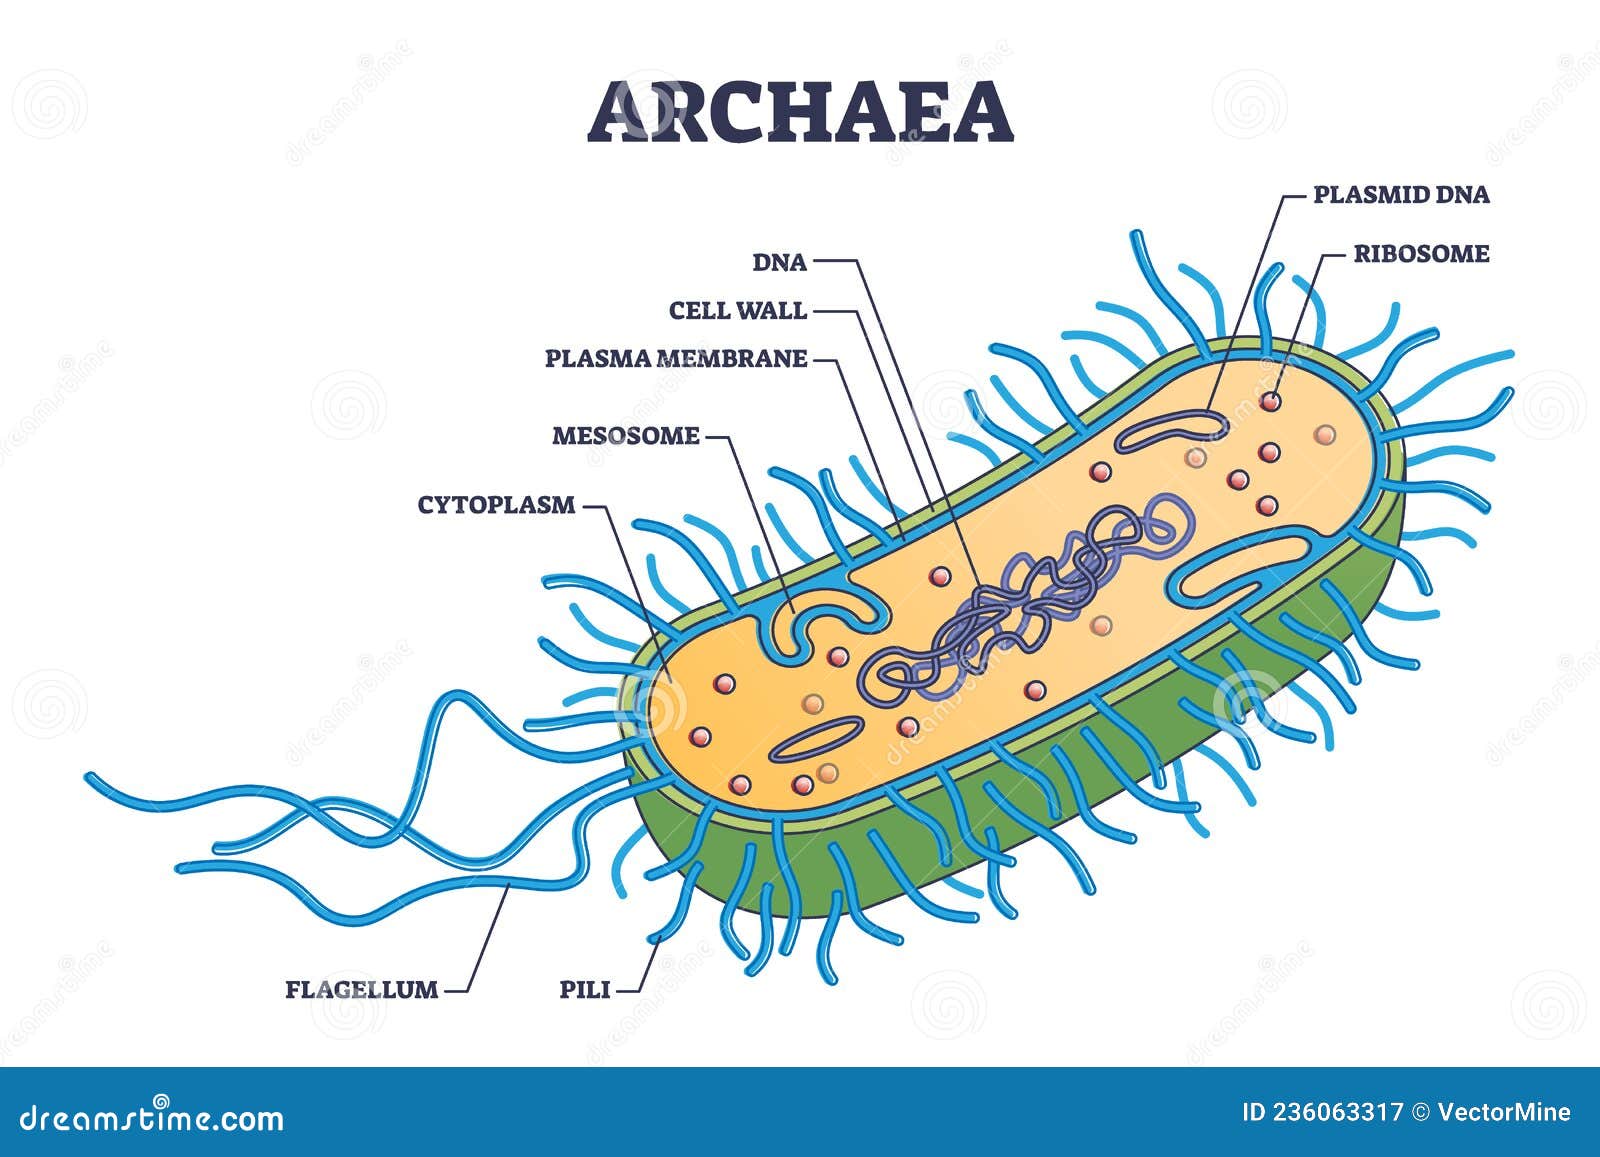 Pengertian Kingdom Archaebacteria Lengkap Ciri Klasif - vrogue.co